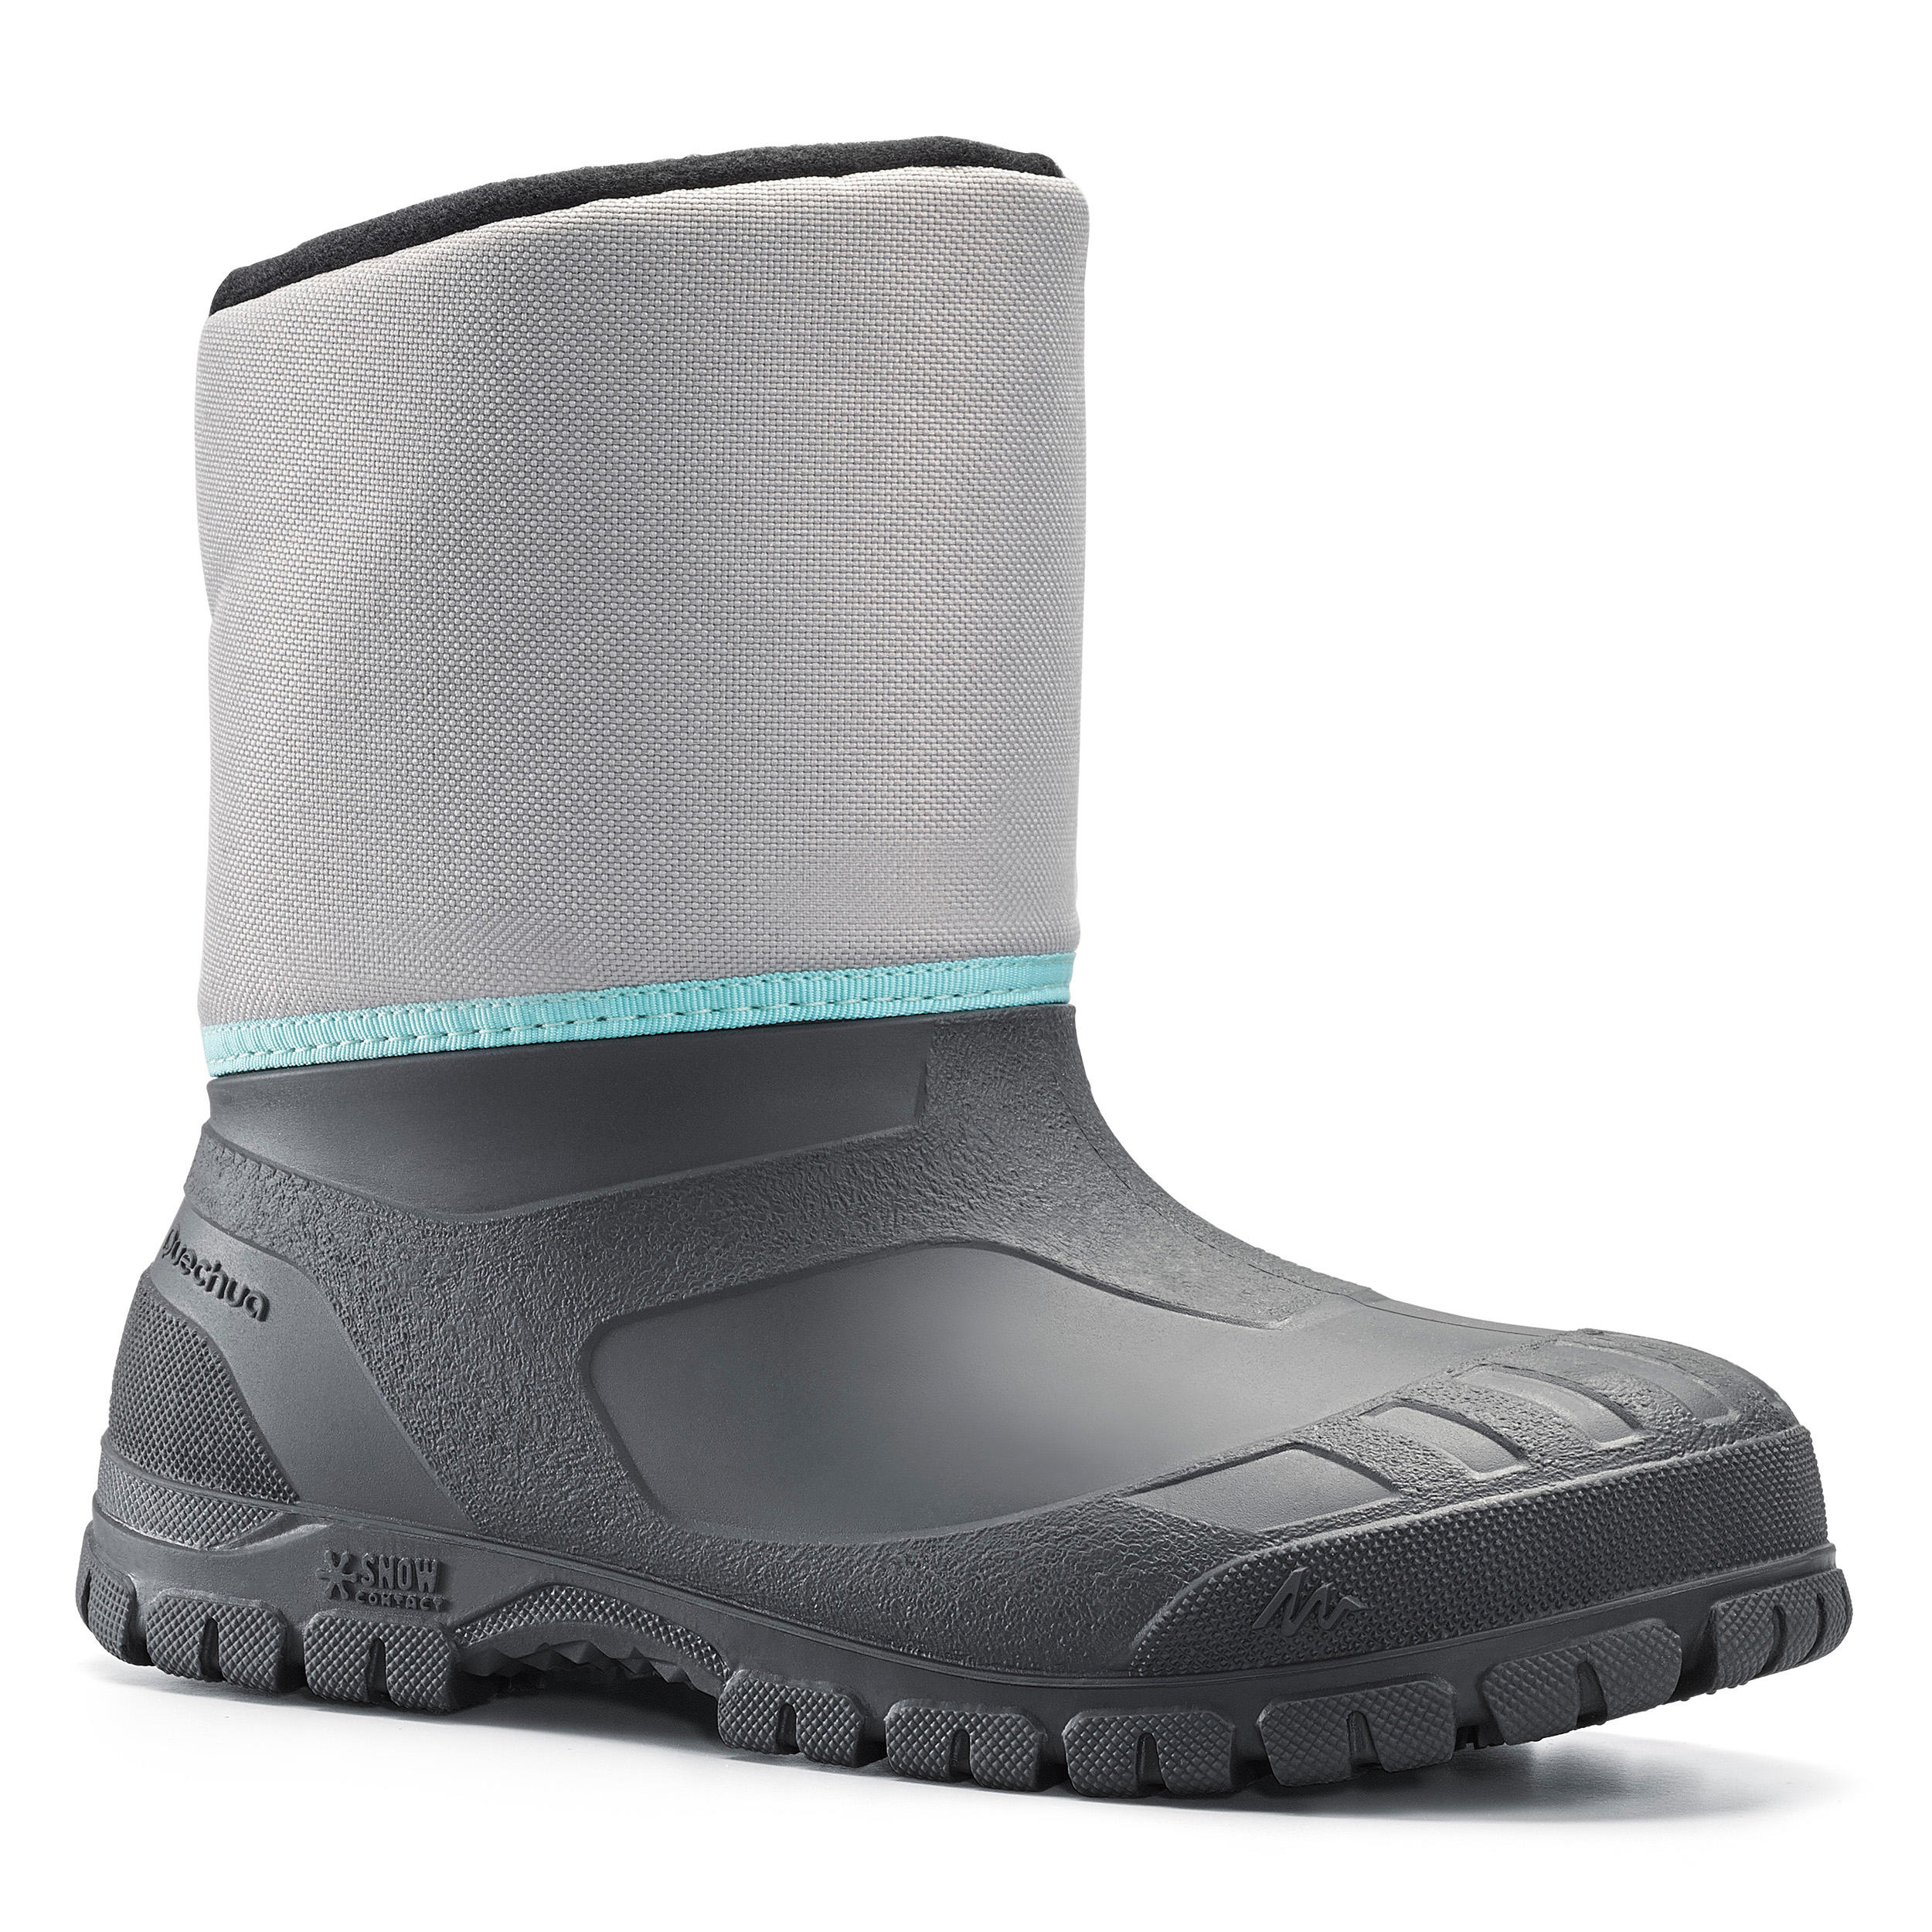 boys waterproof snow boots